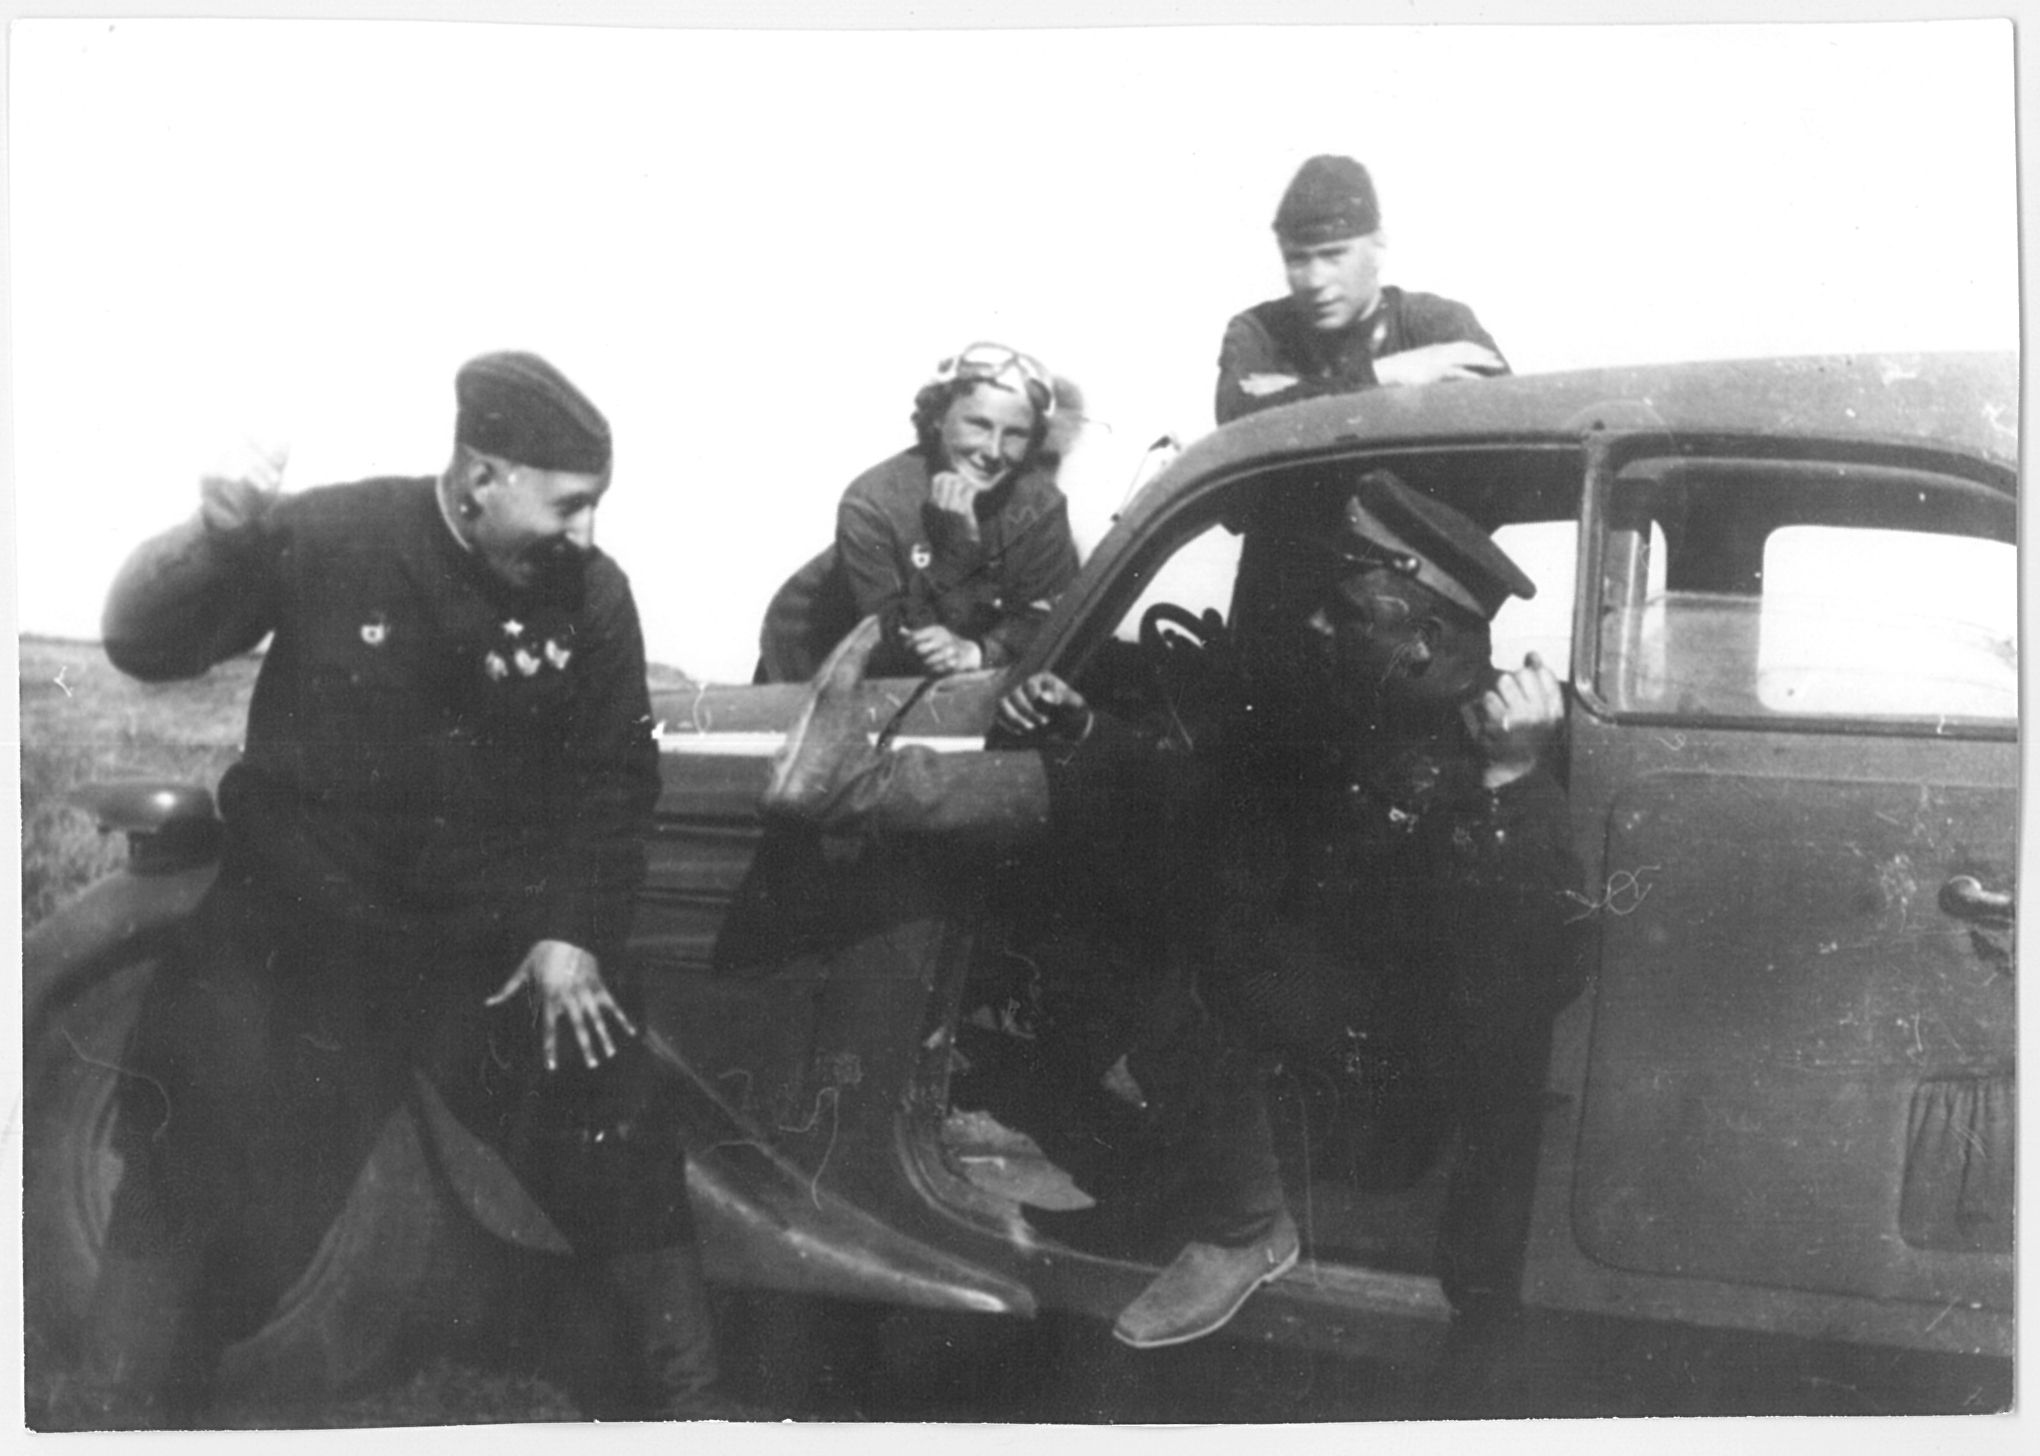 Sasha Martynov, Nikolai Baranov, Lilya and Salomatin. Was almost certainly taken in early May 1943